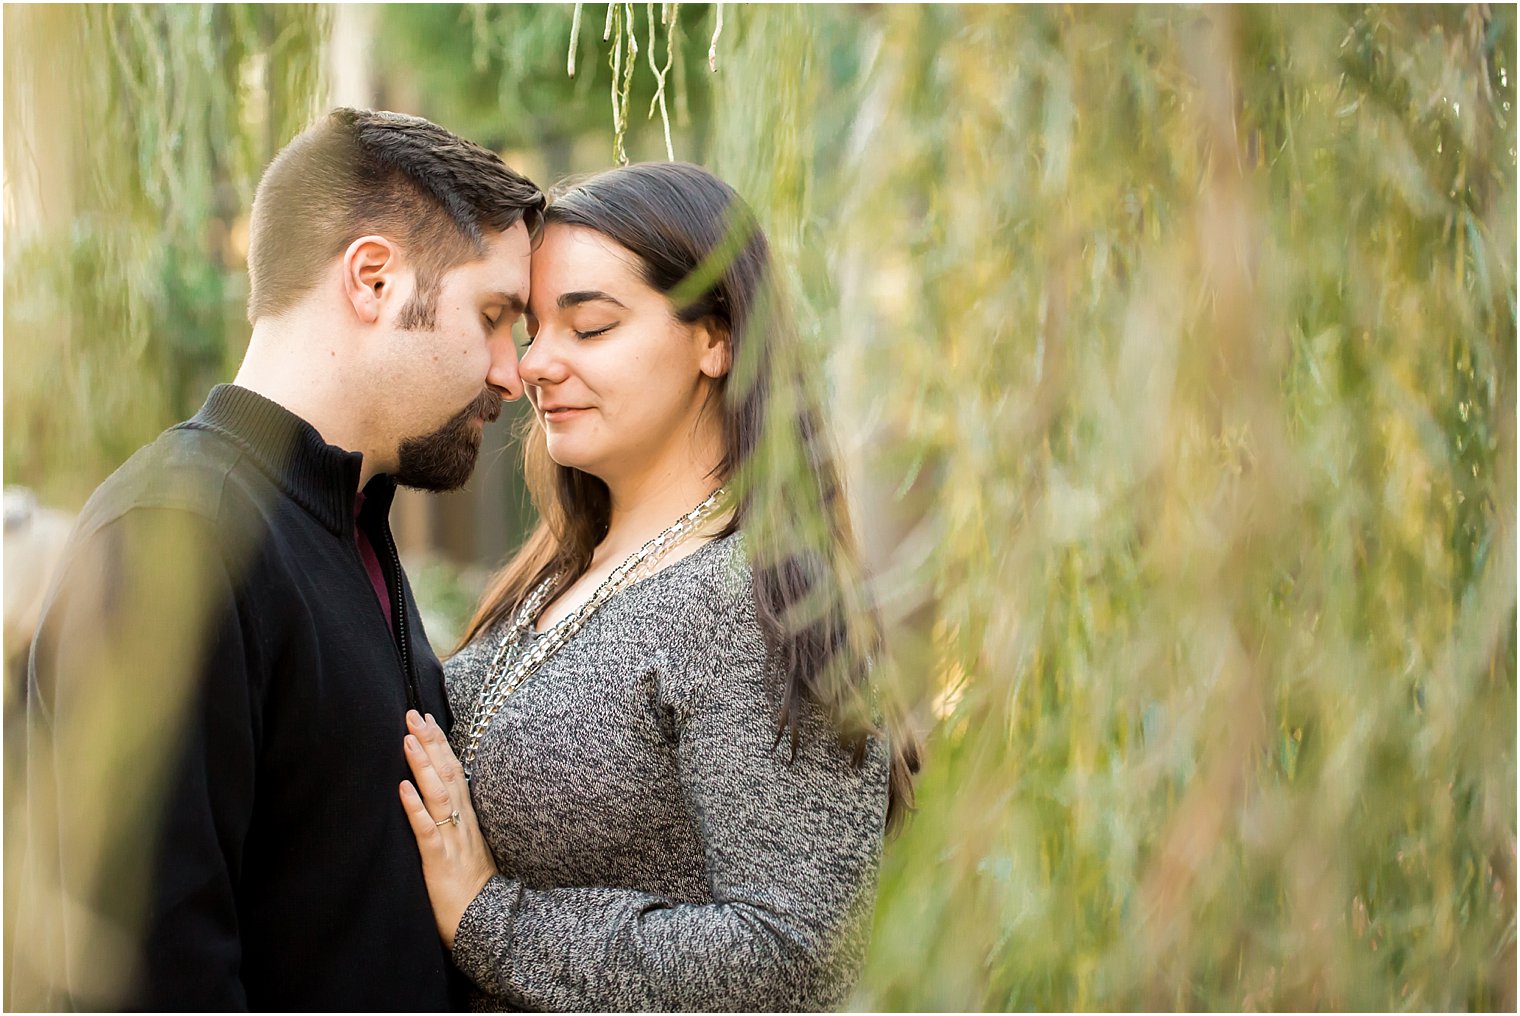 Romantic engagement photos | Photo by Idalia Photography